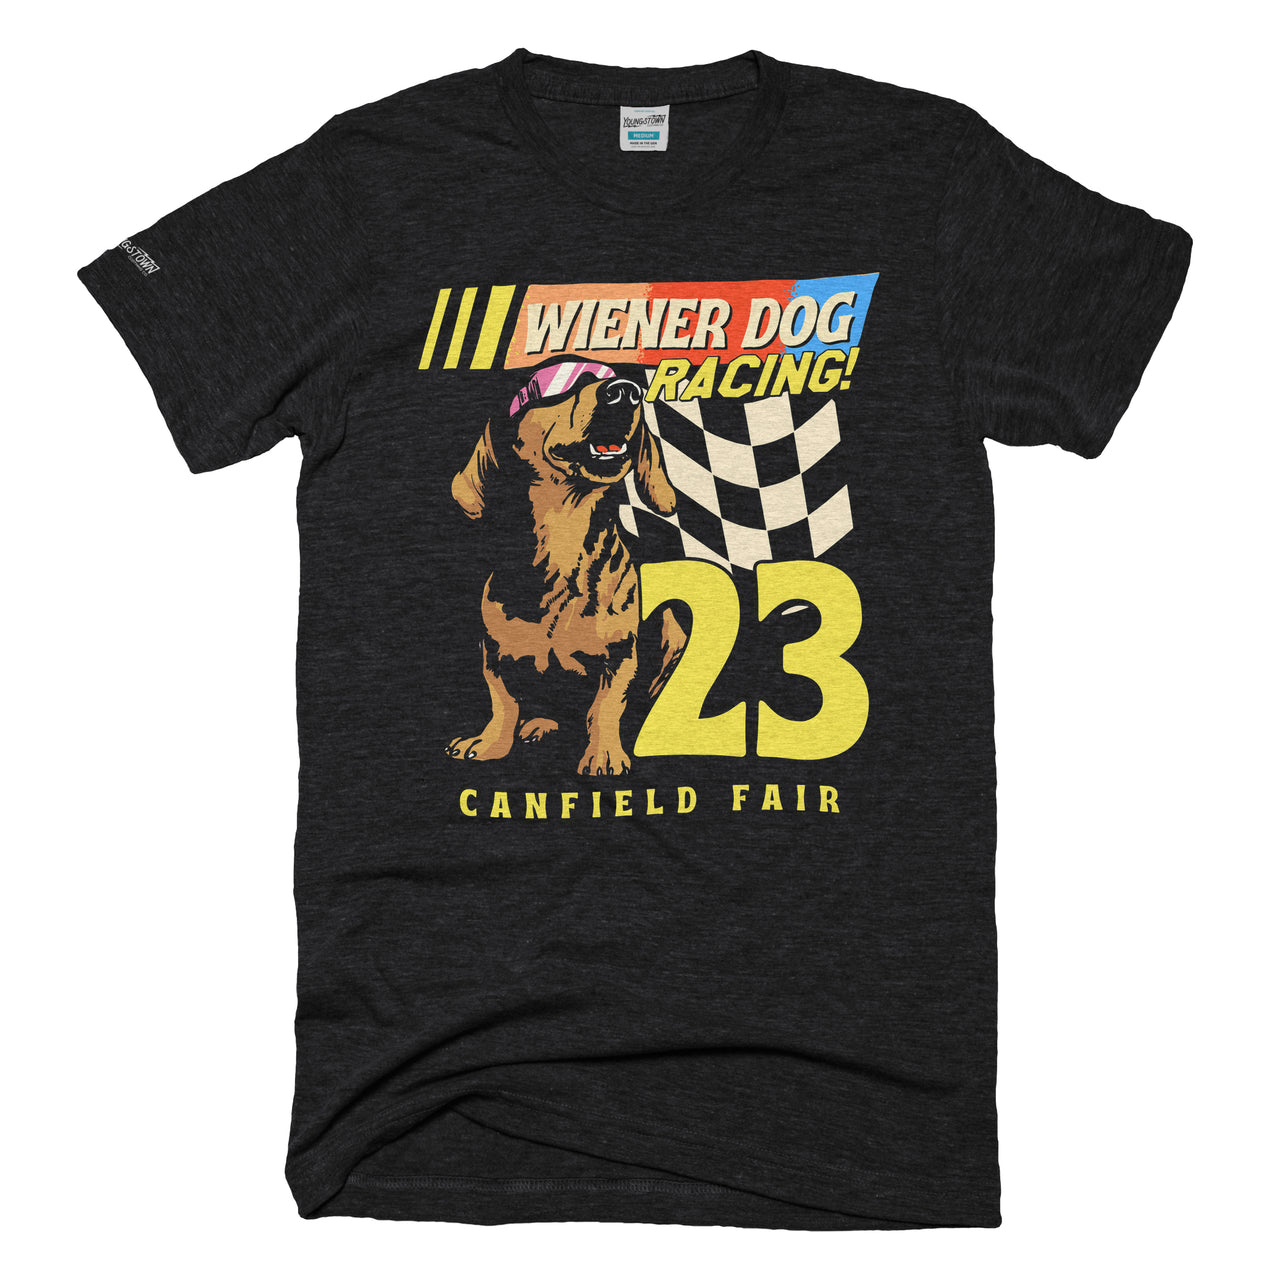 Canfield Fair '23 | Wiener Dog Racing!